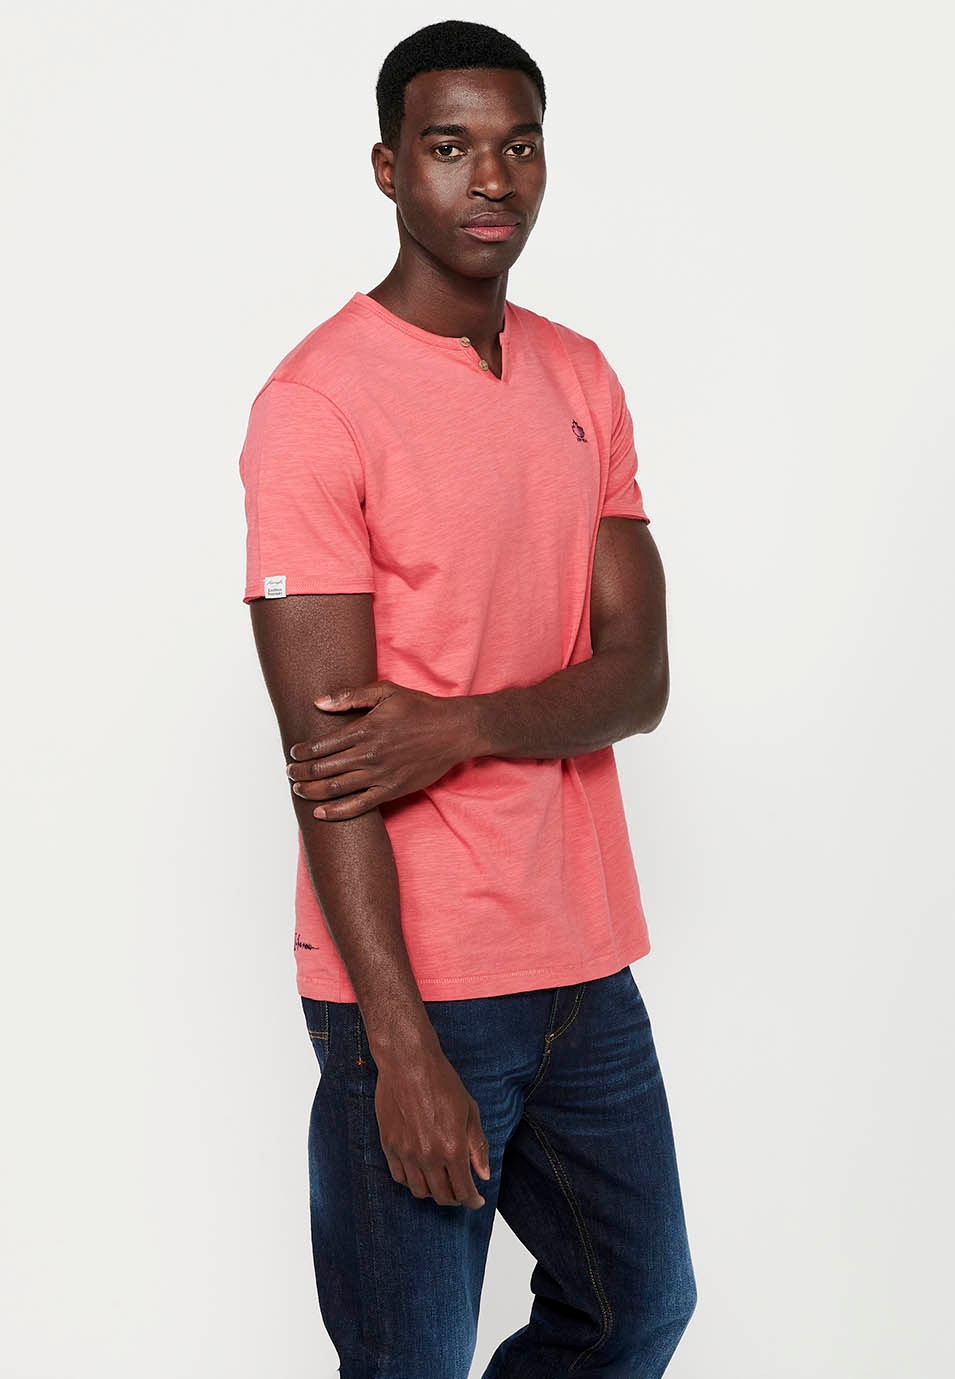 Camiseta básica de manga corta de algodón, cuello V con boton, color rosa para hombre 7